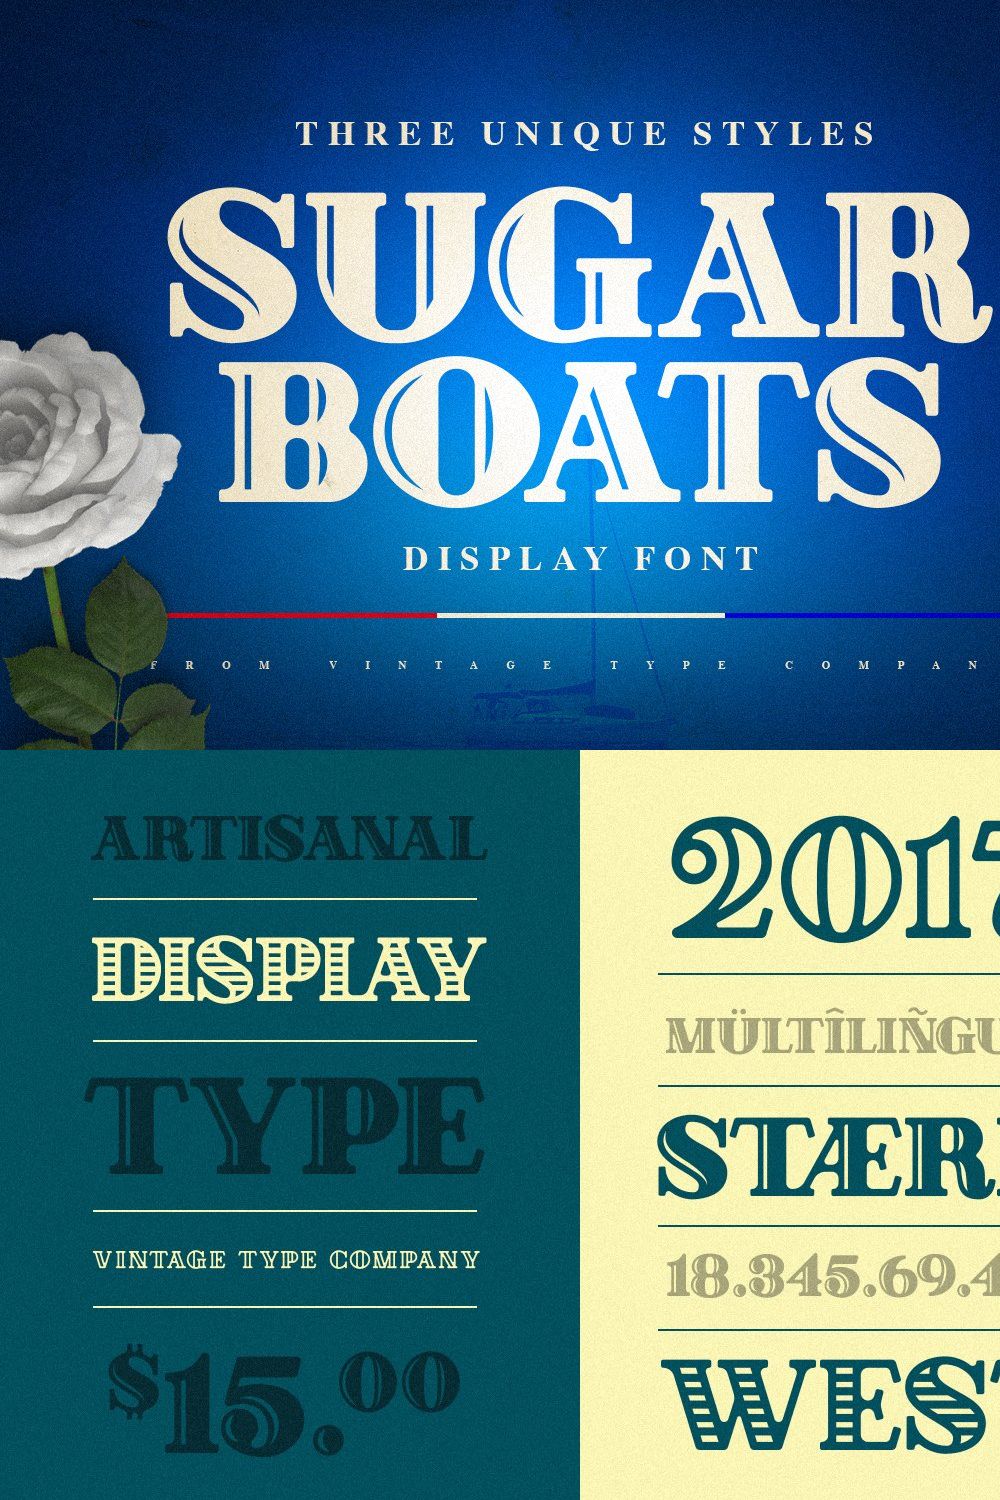 Sugar Boats Display Font pinterest preview image.